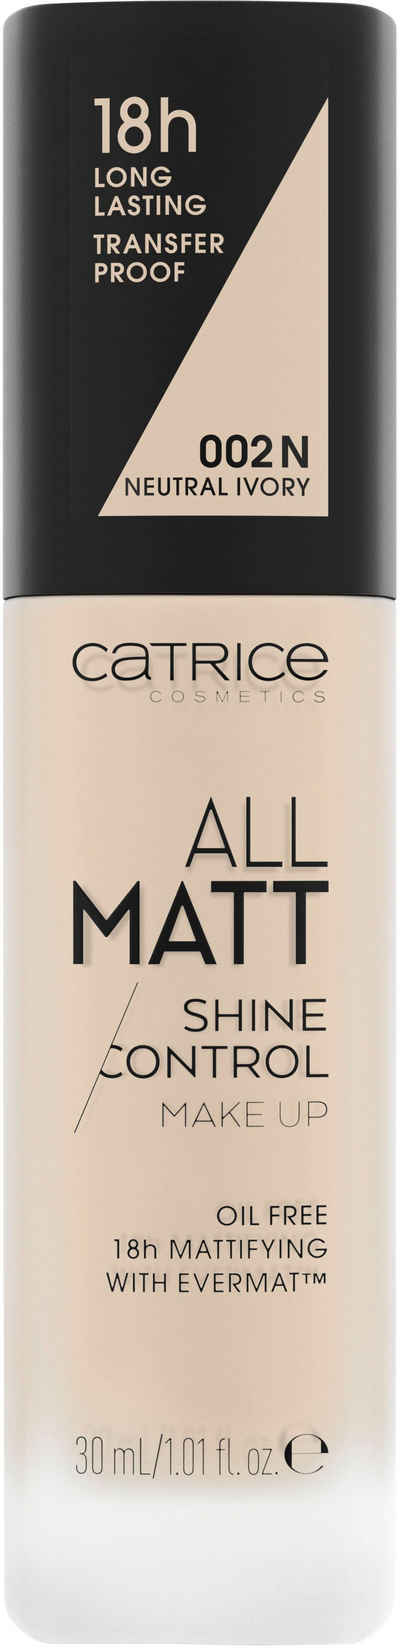 Catrice Foundation All Matt Shine Control Make Up